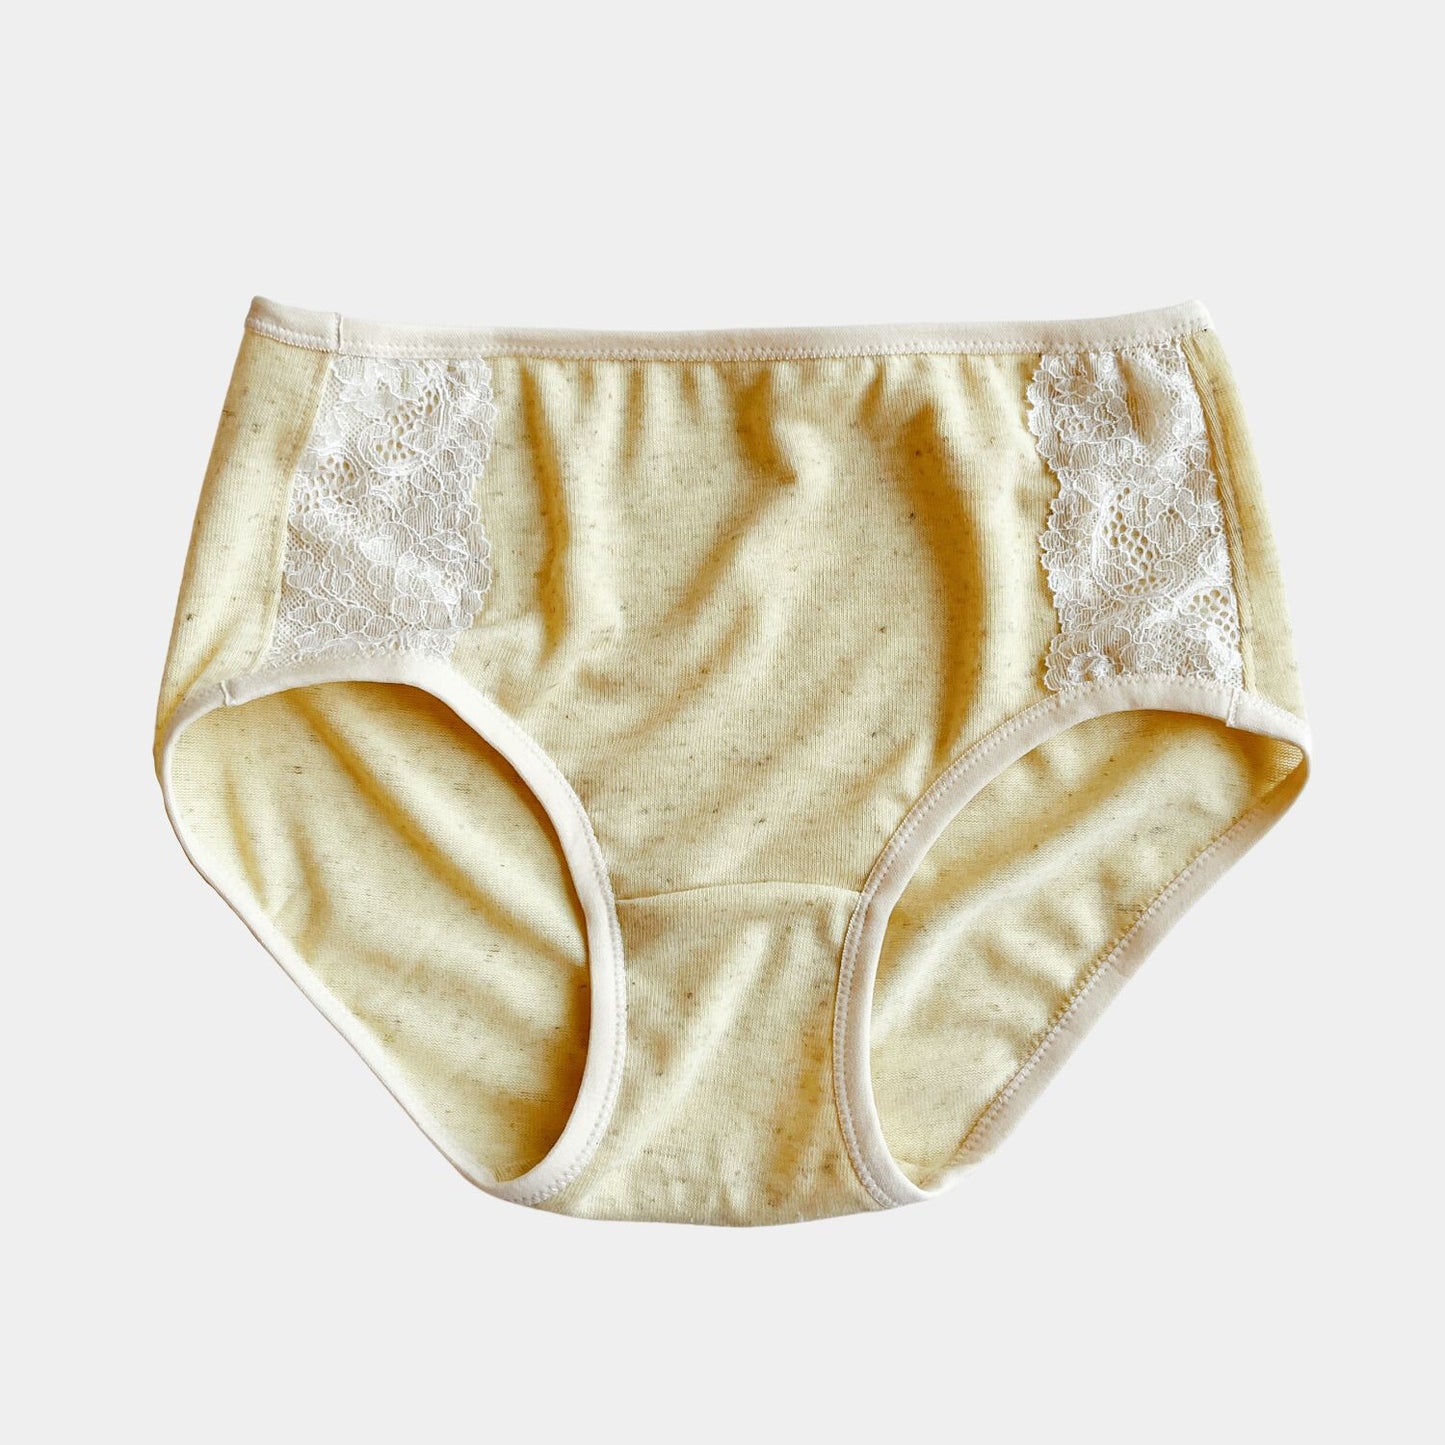 LIDON Women's Underwear Knickers Briefs Cotton Ladies Panties